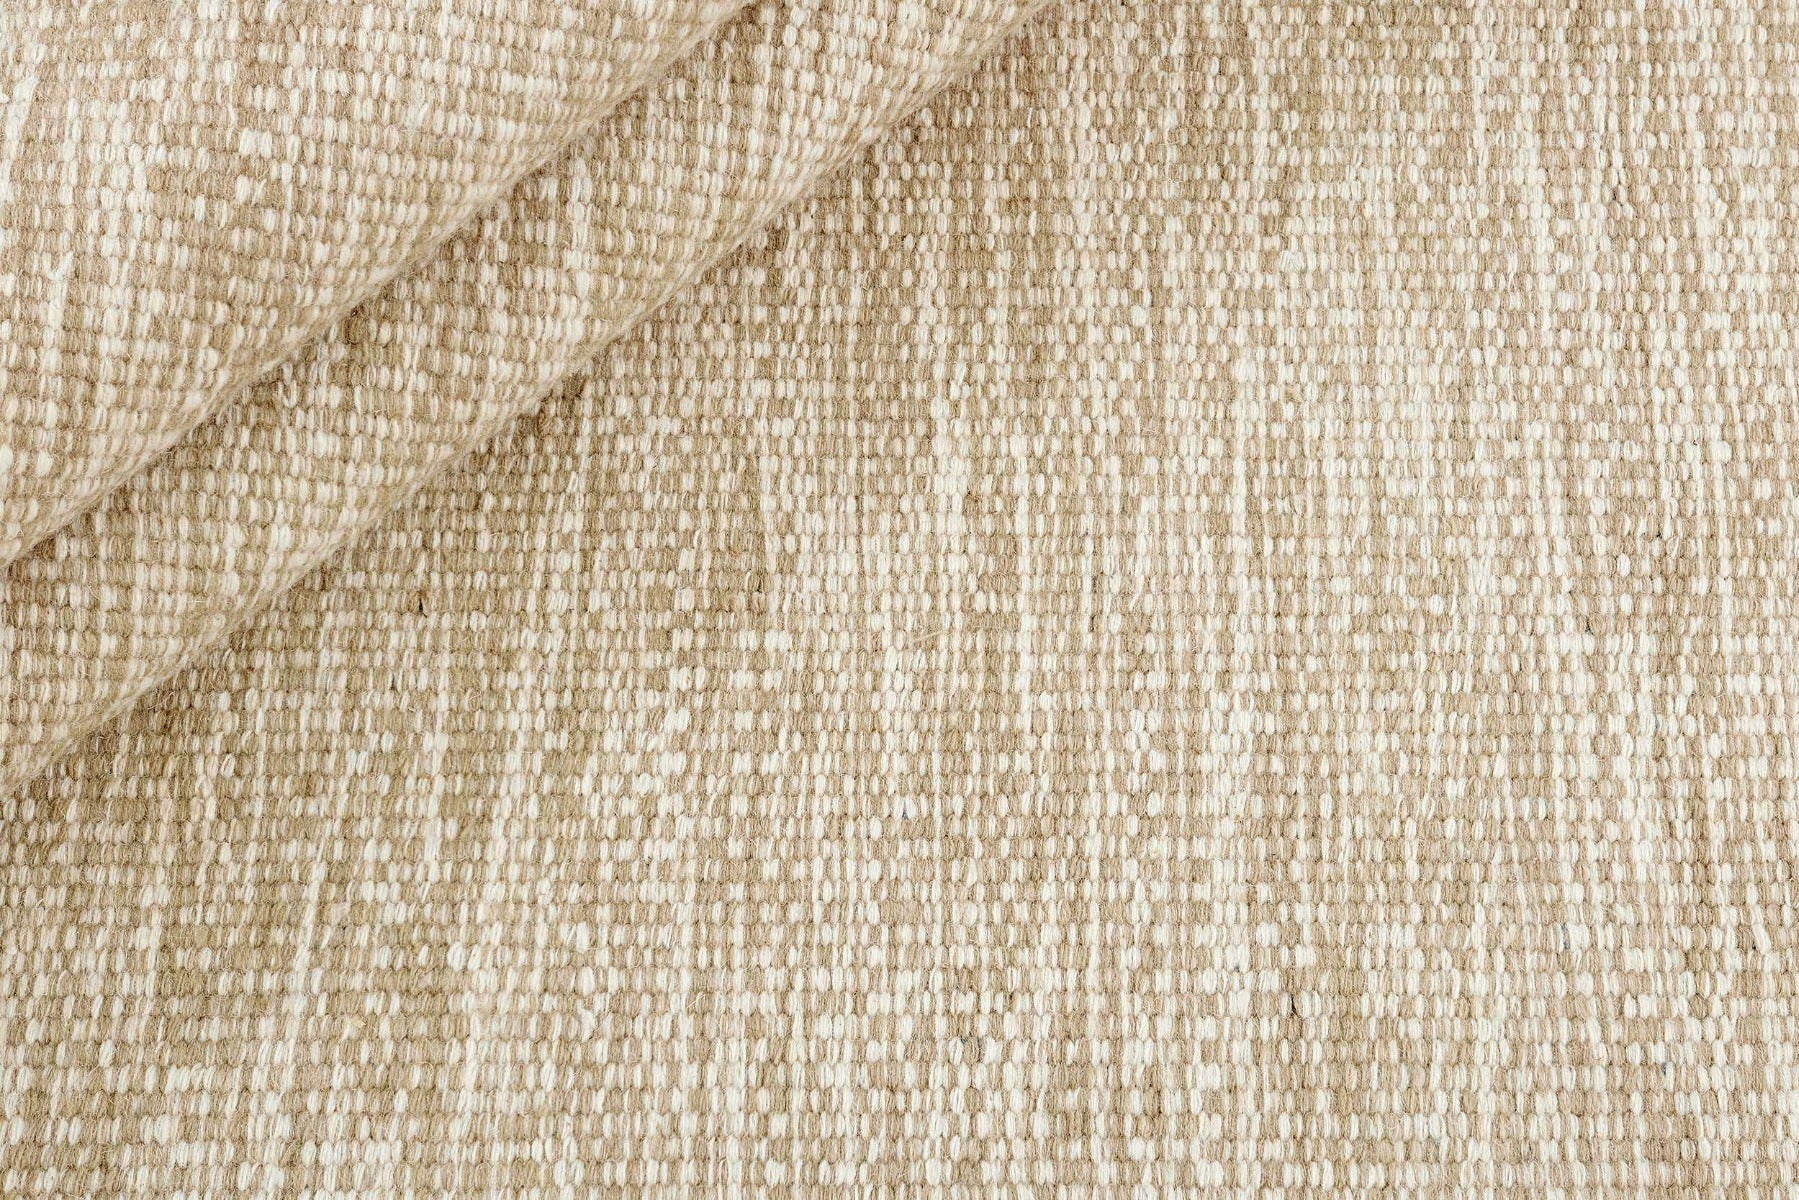 plain beige flatweave area rug
